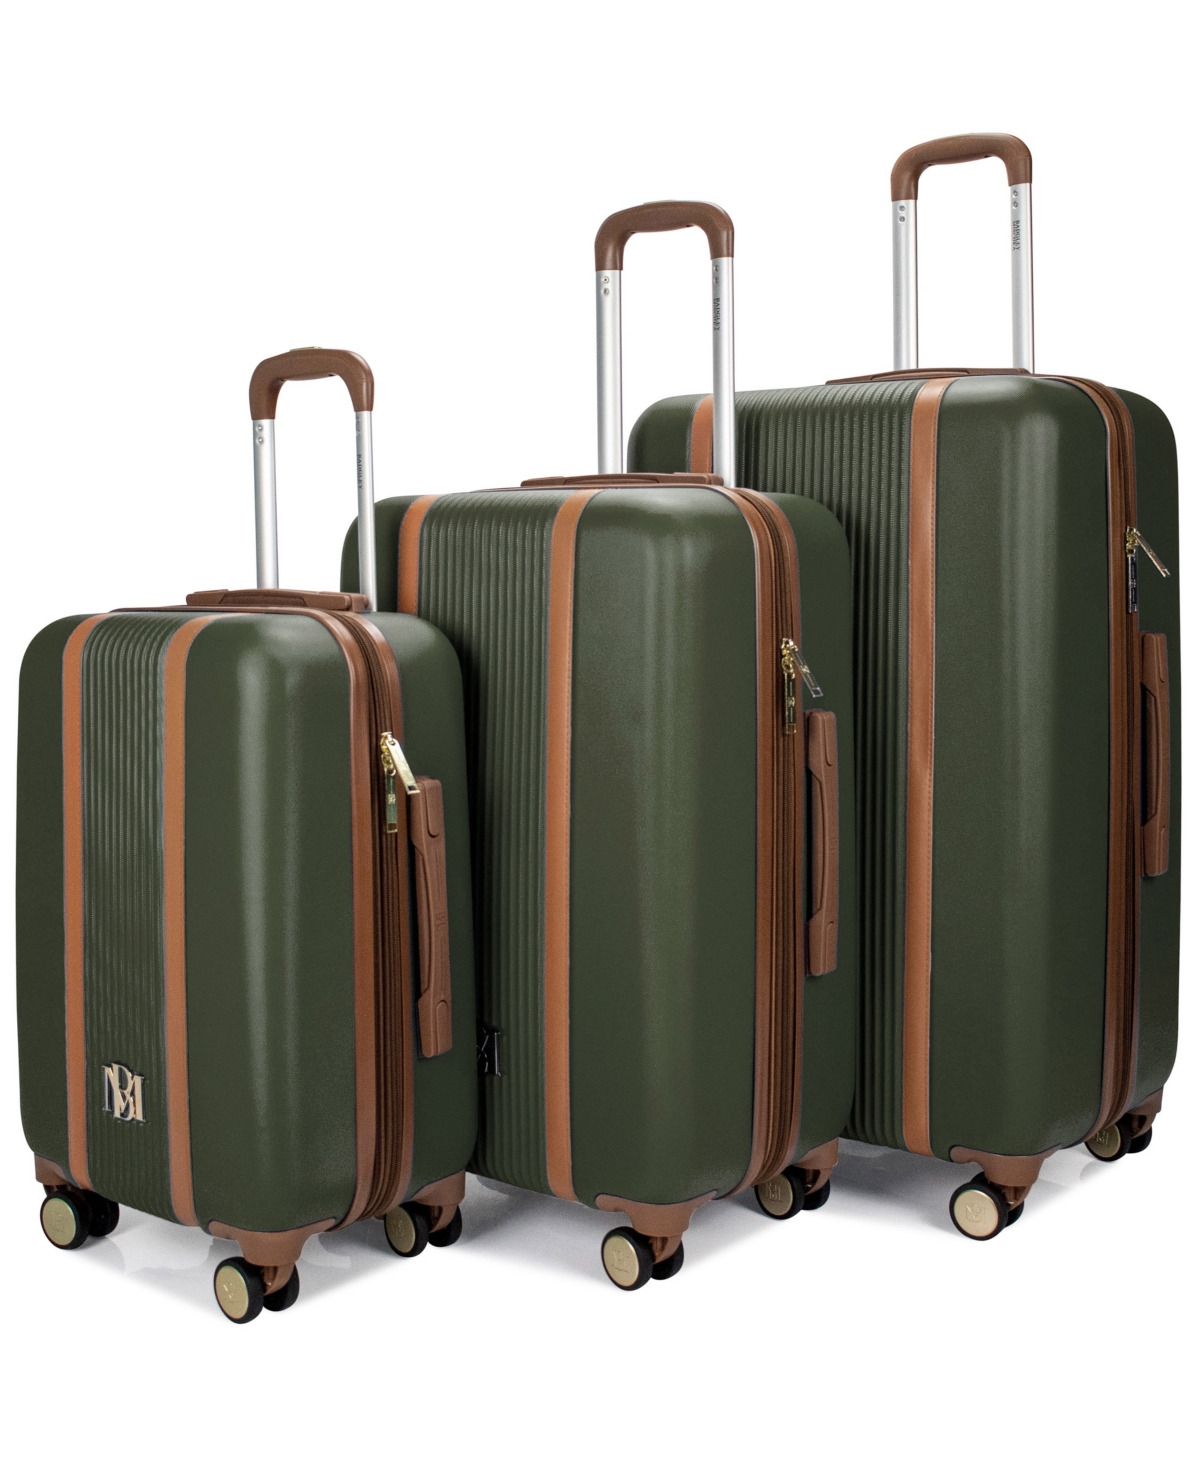 Badgley Mischka Mia Expandable Retro Luggage Set, 3 Piece In Olive Green